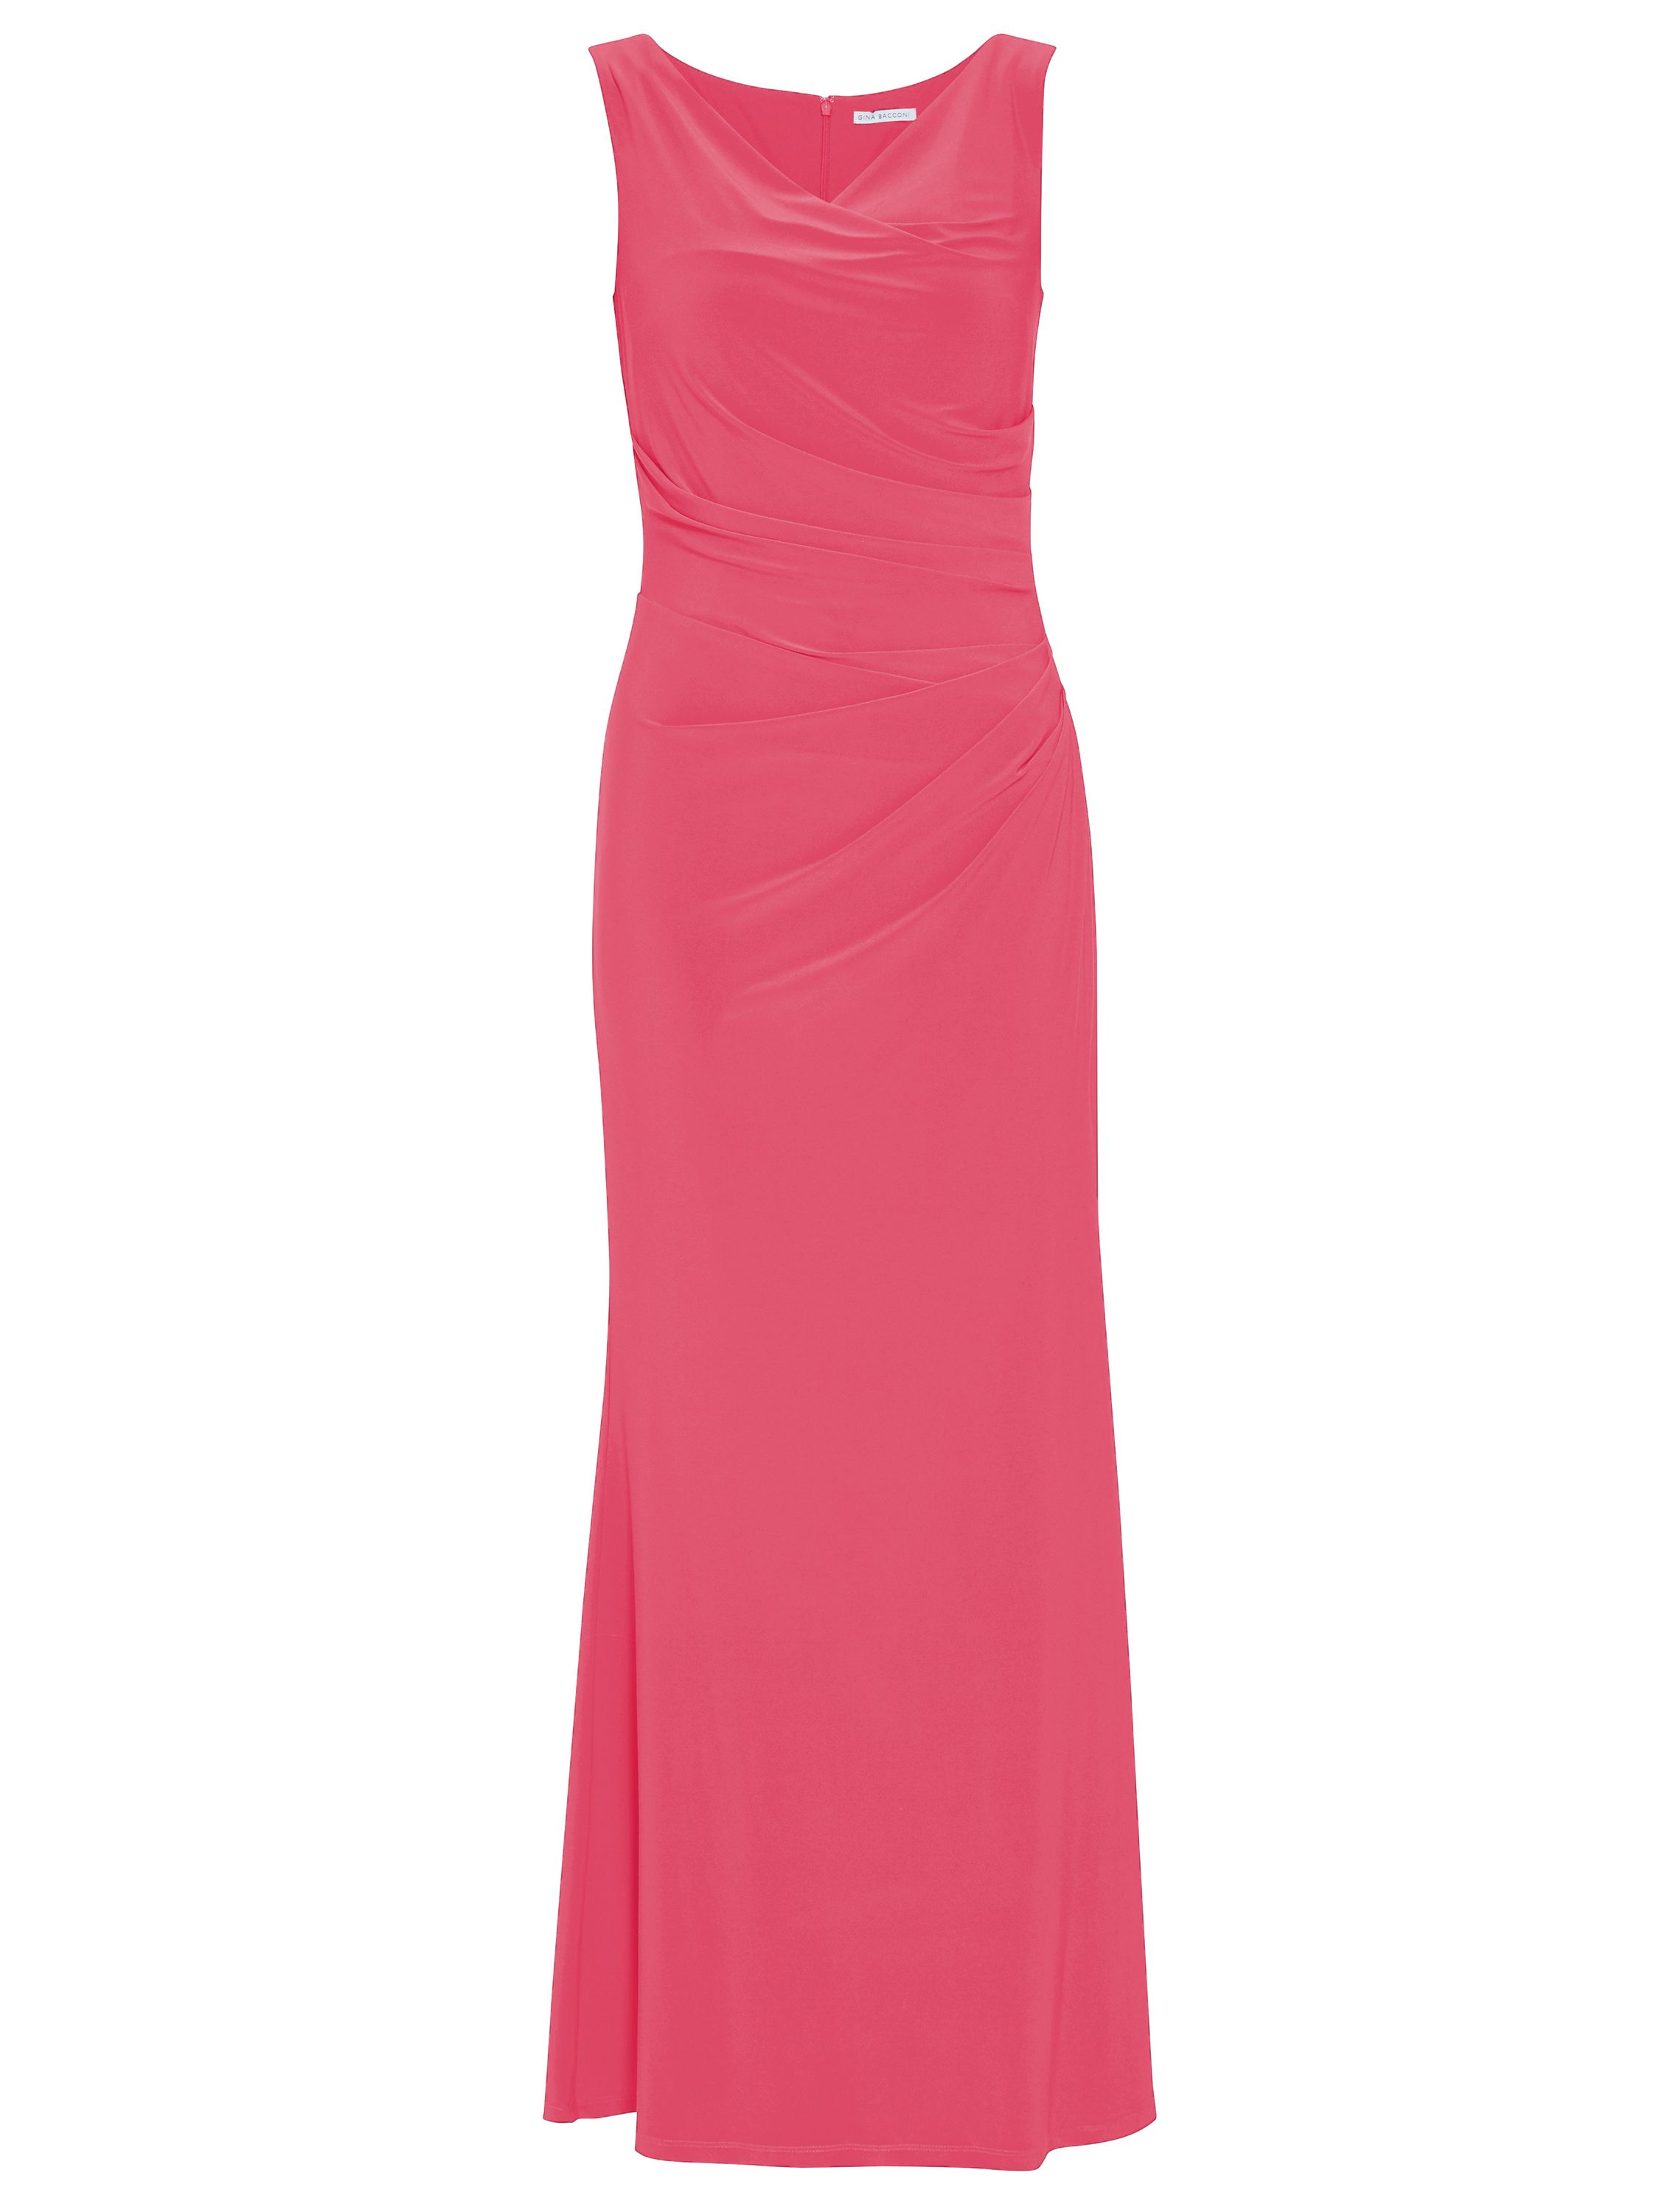 Gina Bacconi Stella Maxi Dress in Pink